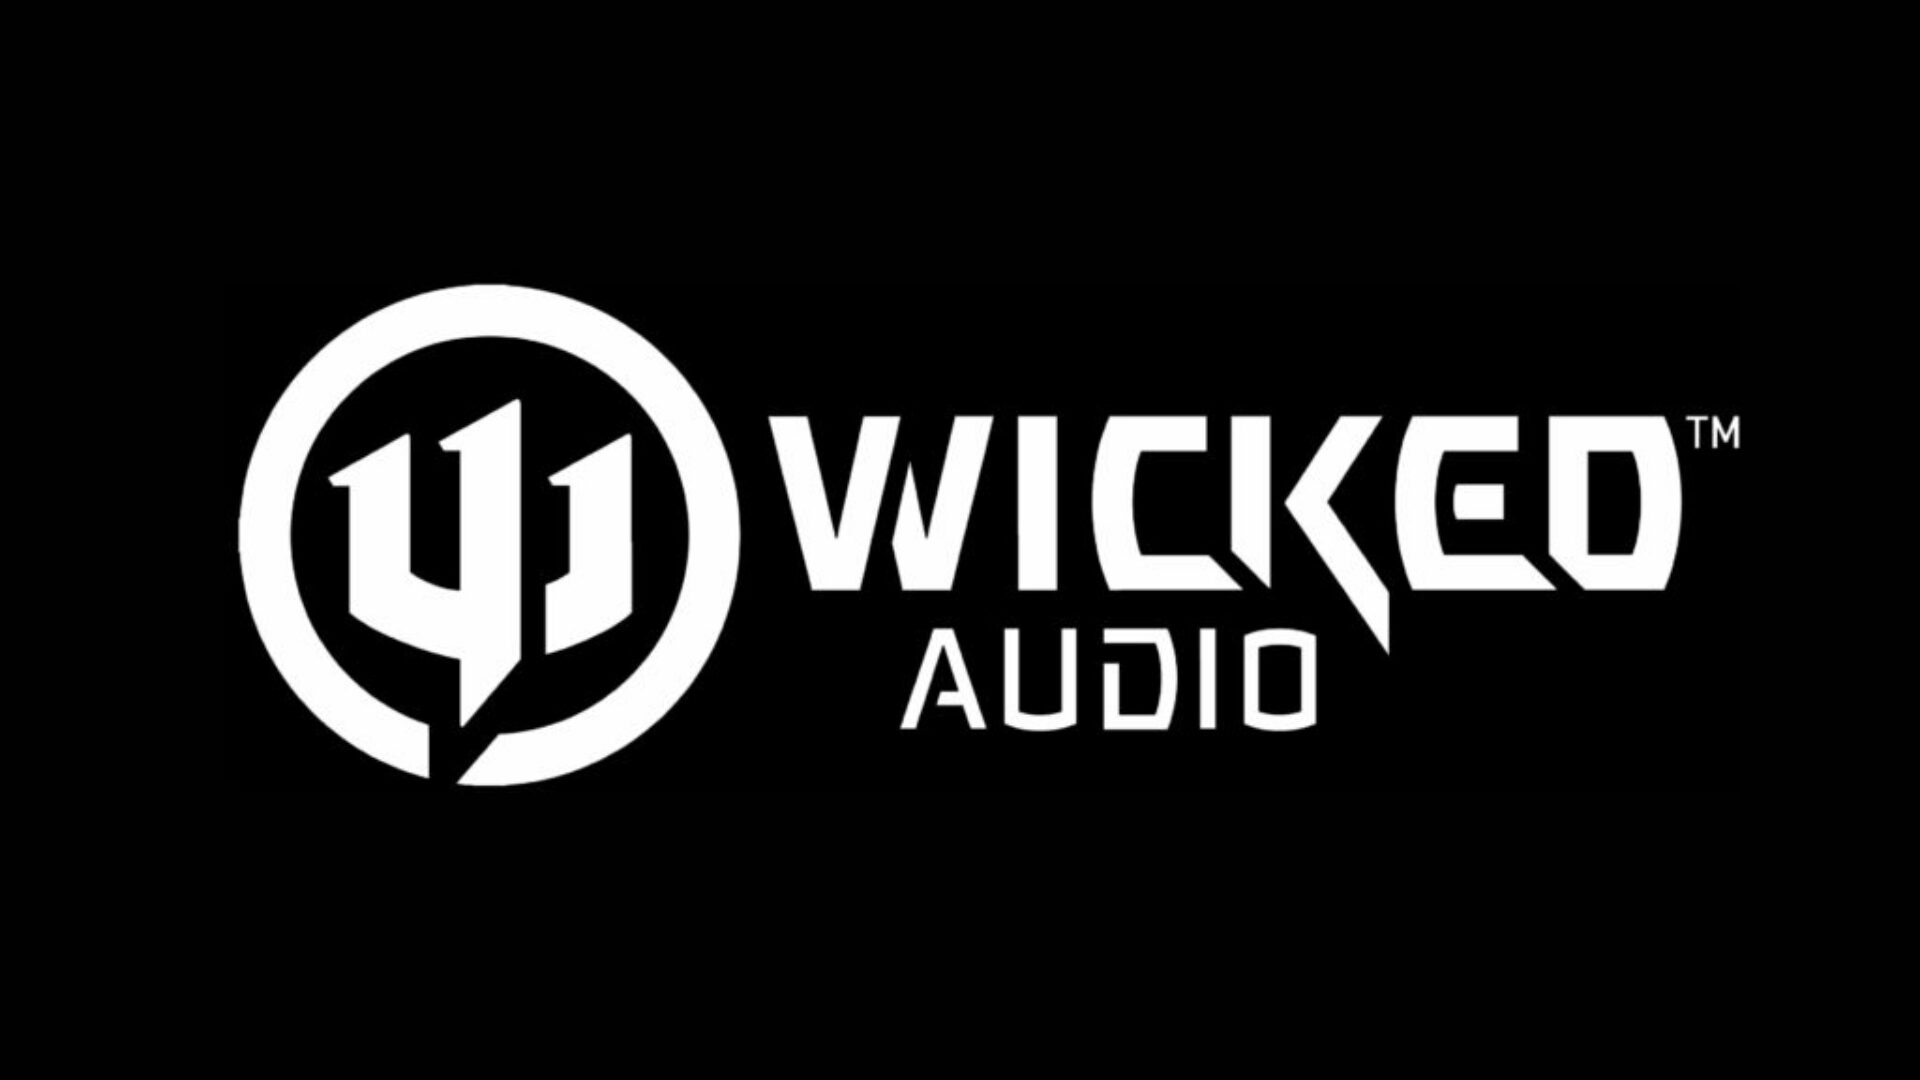 sponsor logo_wicked audio